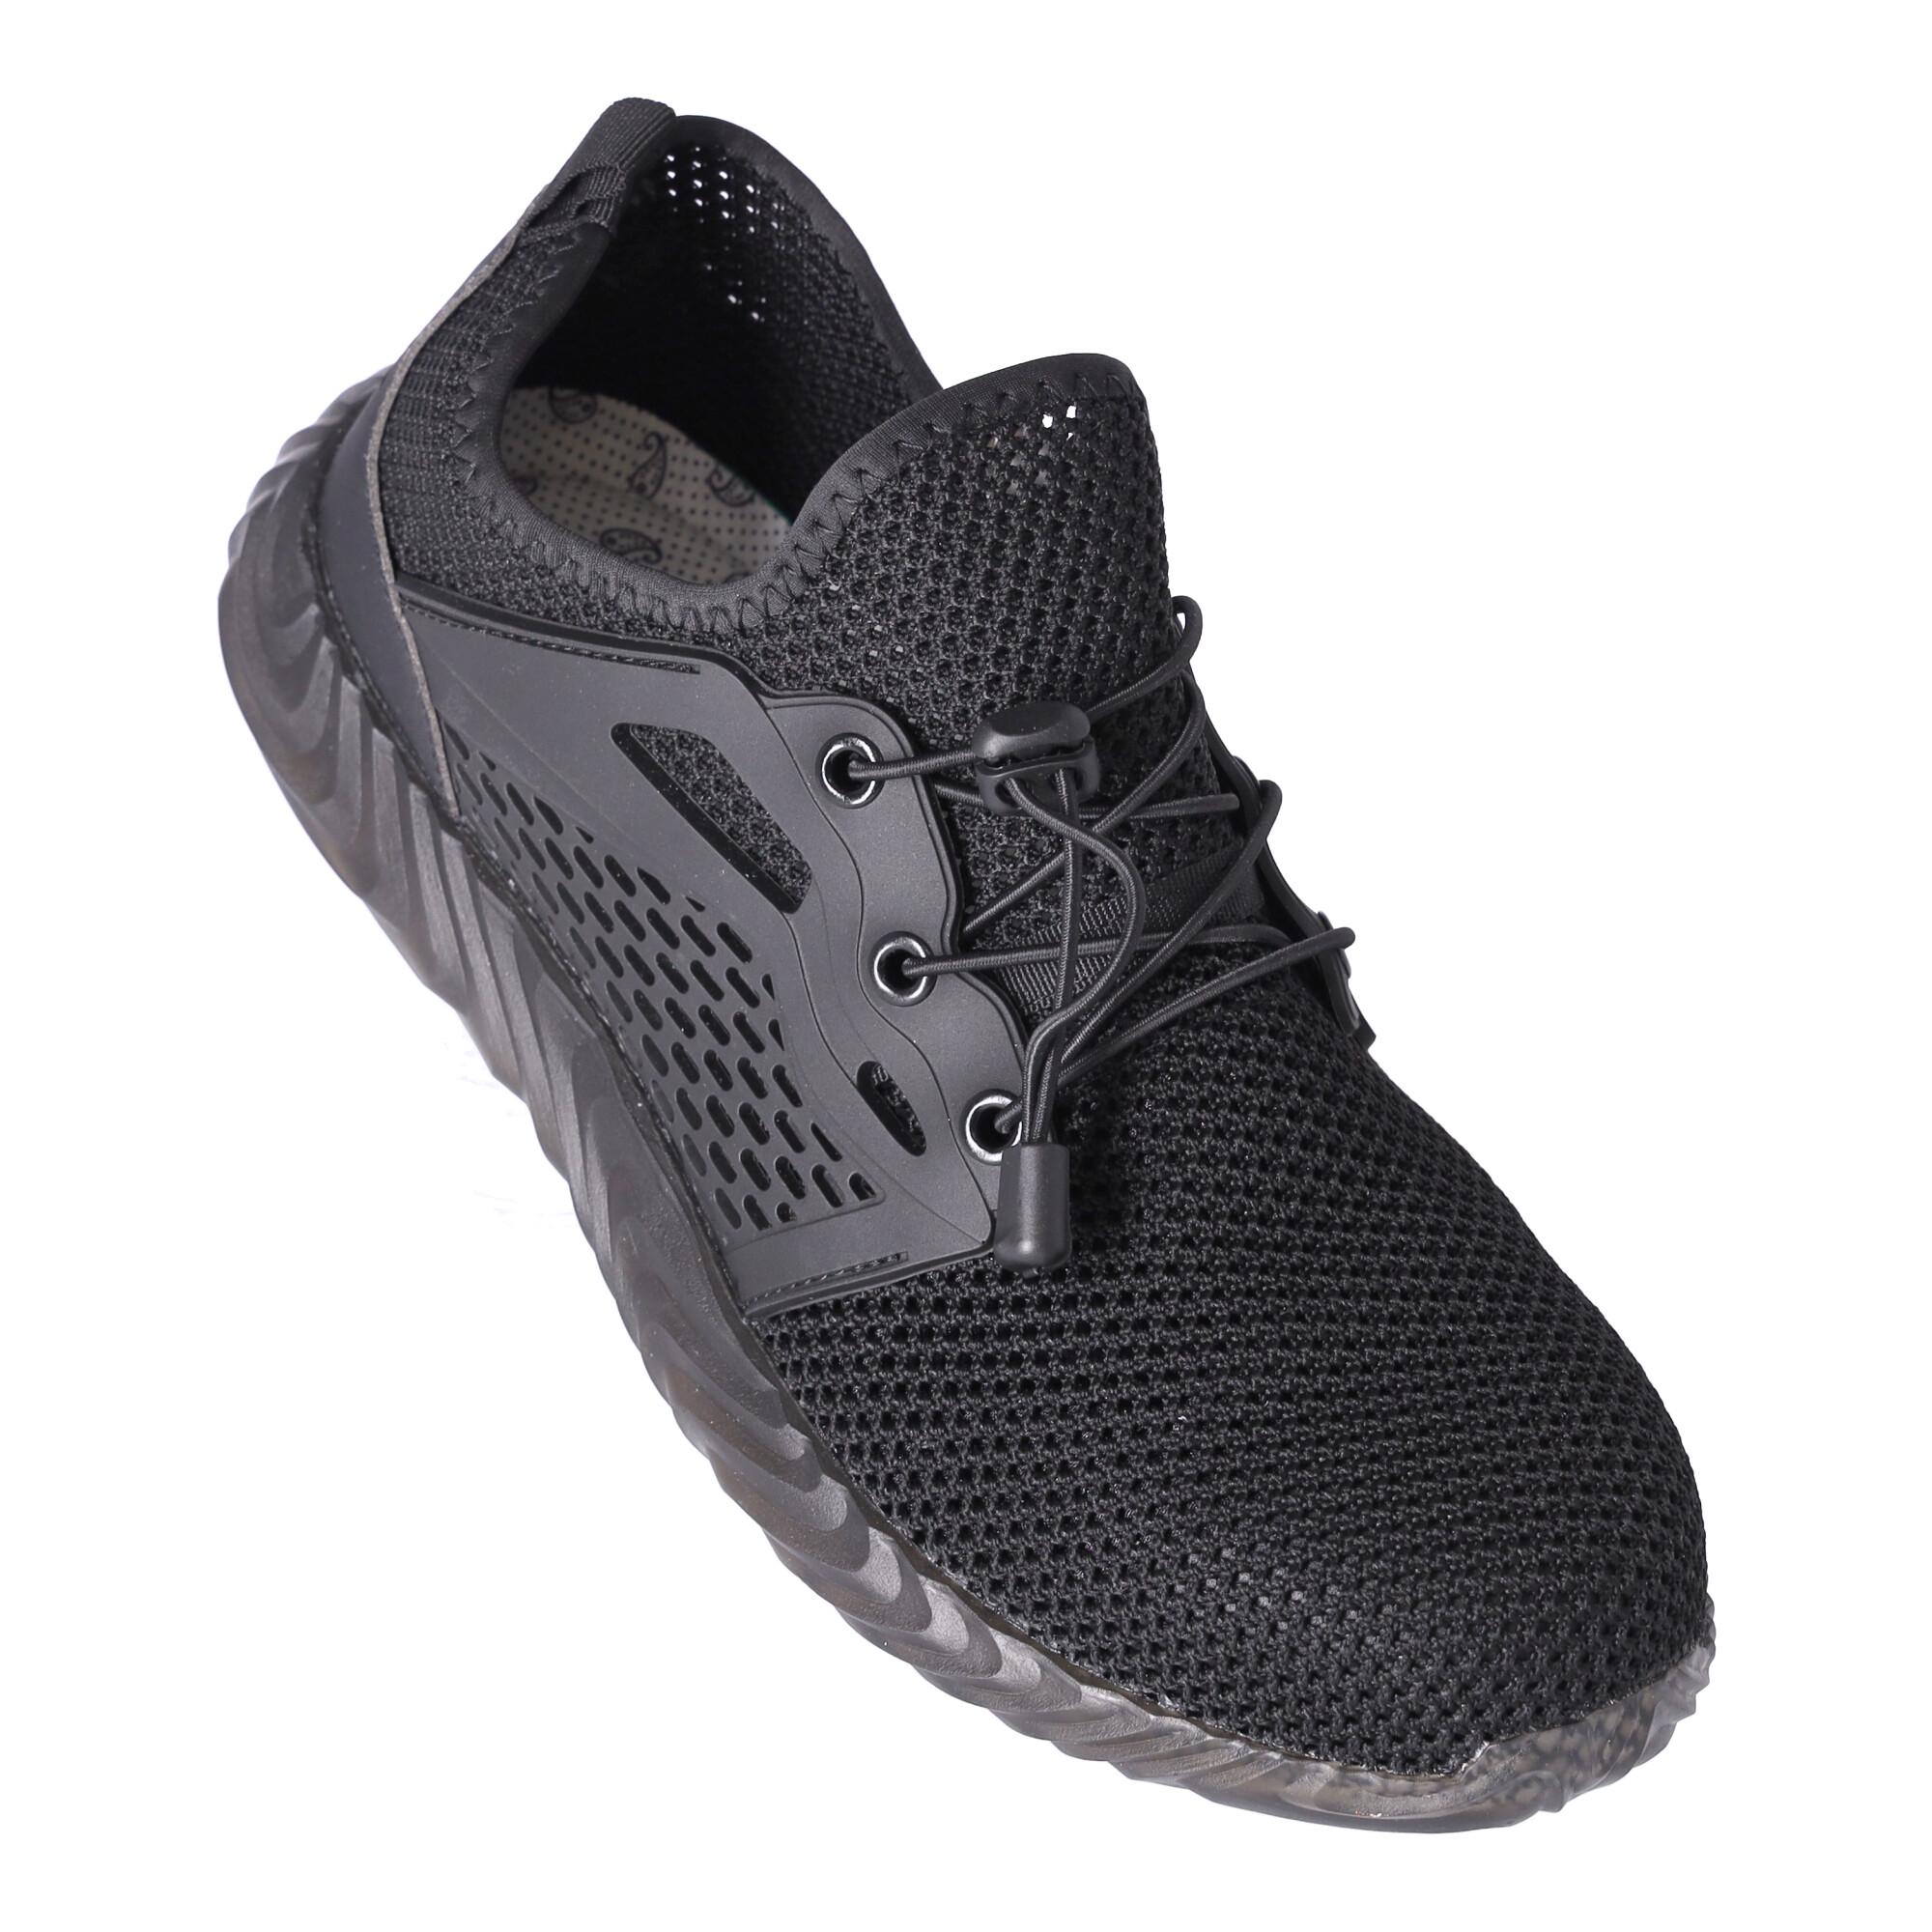 Work safety shoes Soft "40" - black